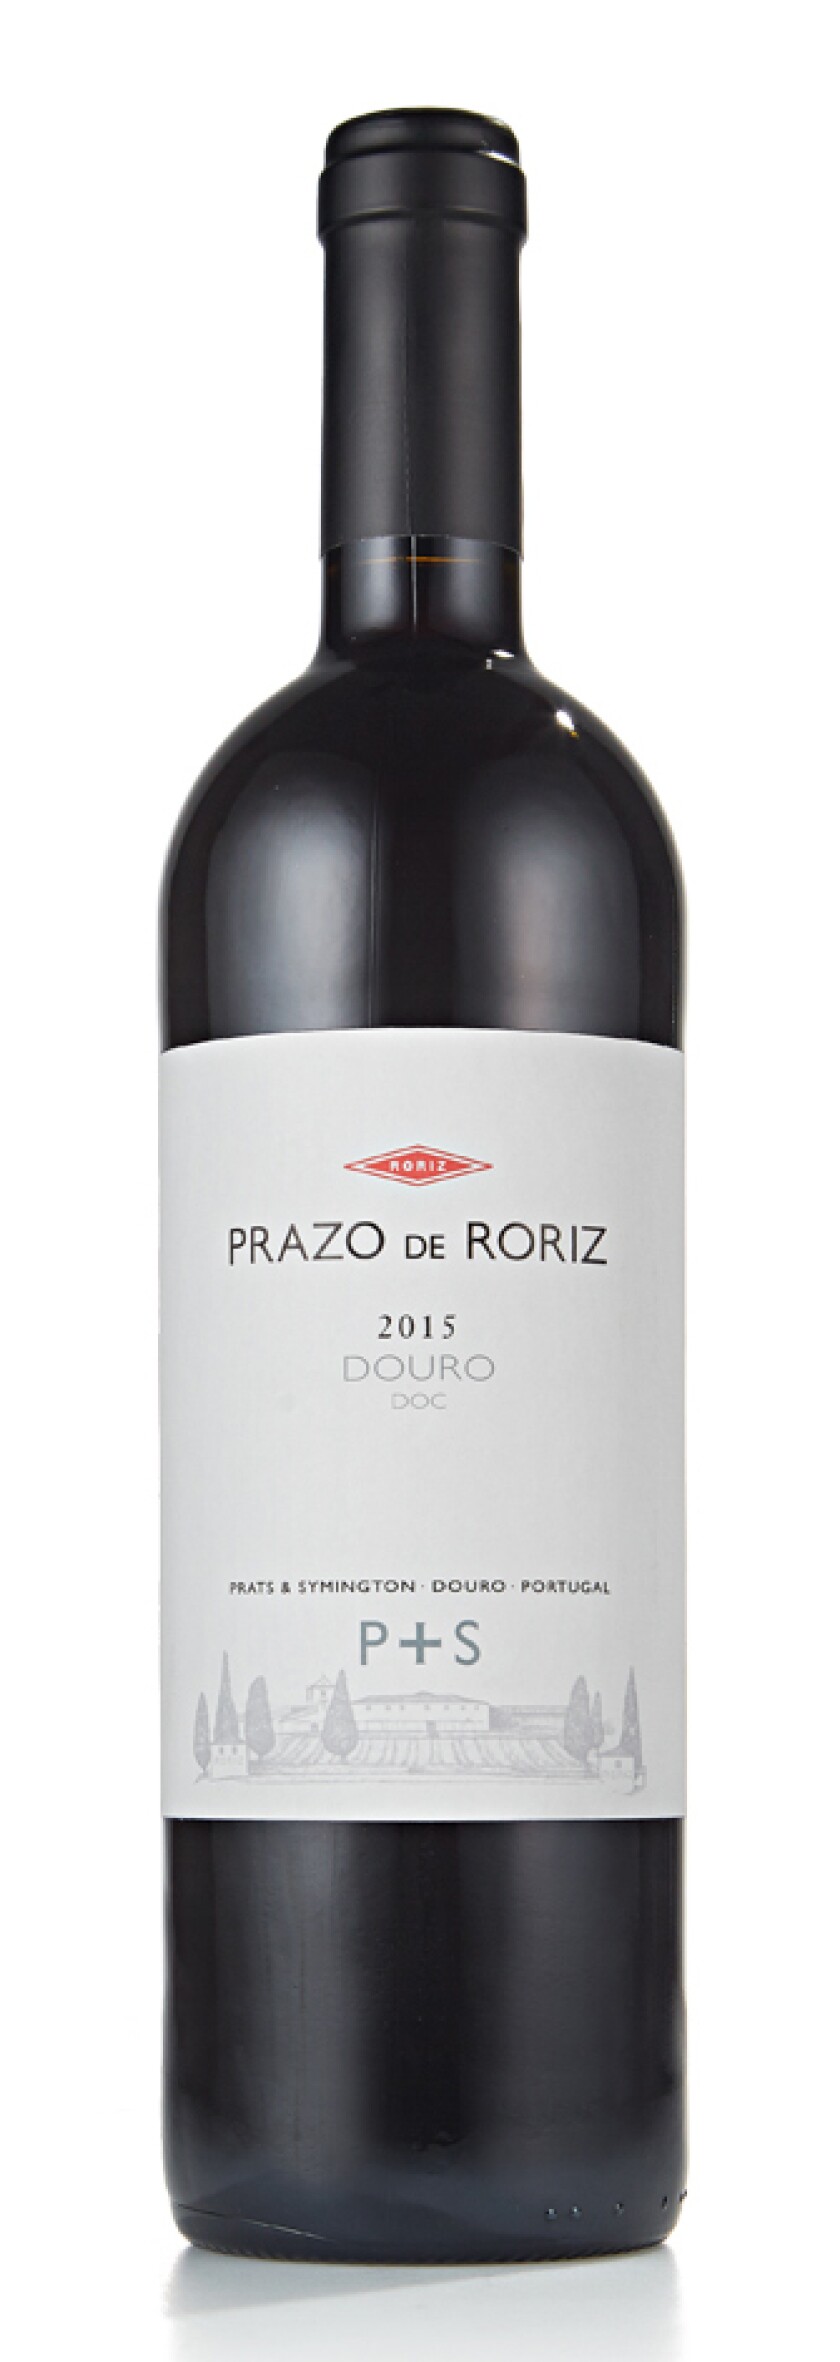 AARP, The Girlfriend, Prazo de Roriz, Douro, red wine, wine tasting